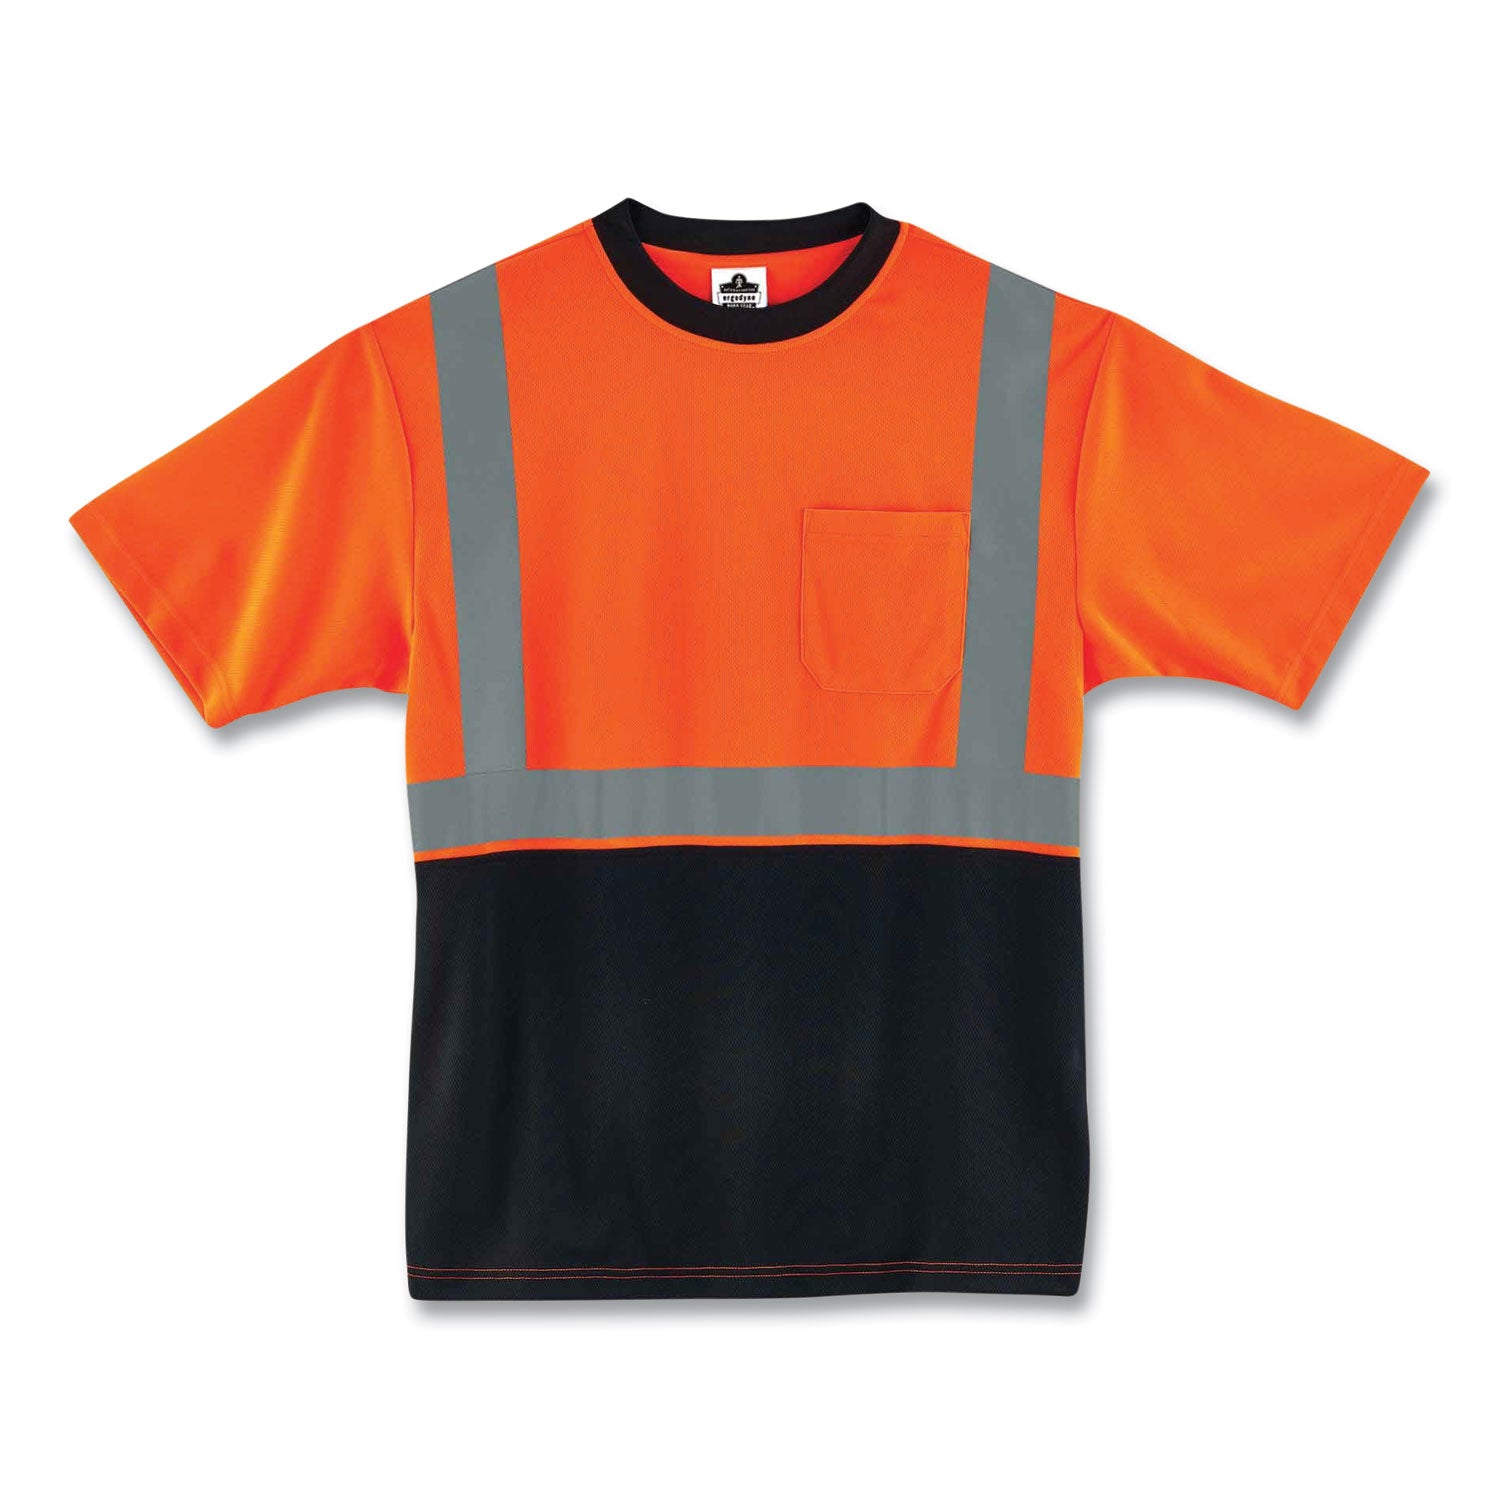 glowear-8289bk-class-2-hi-vis-t-shirt-with-black-bottom-large-orange-ships-in-1-3-business-days_ego22514 - 1